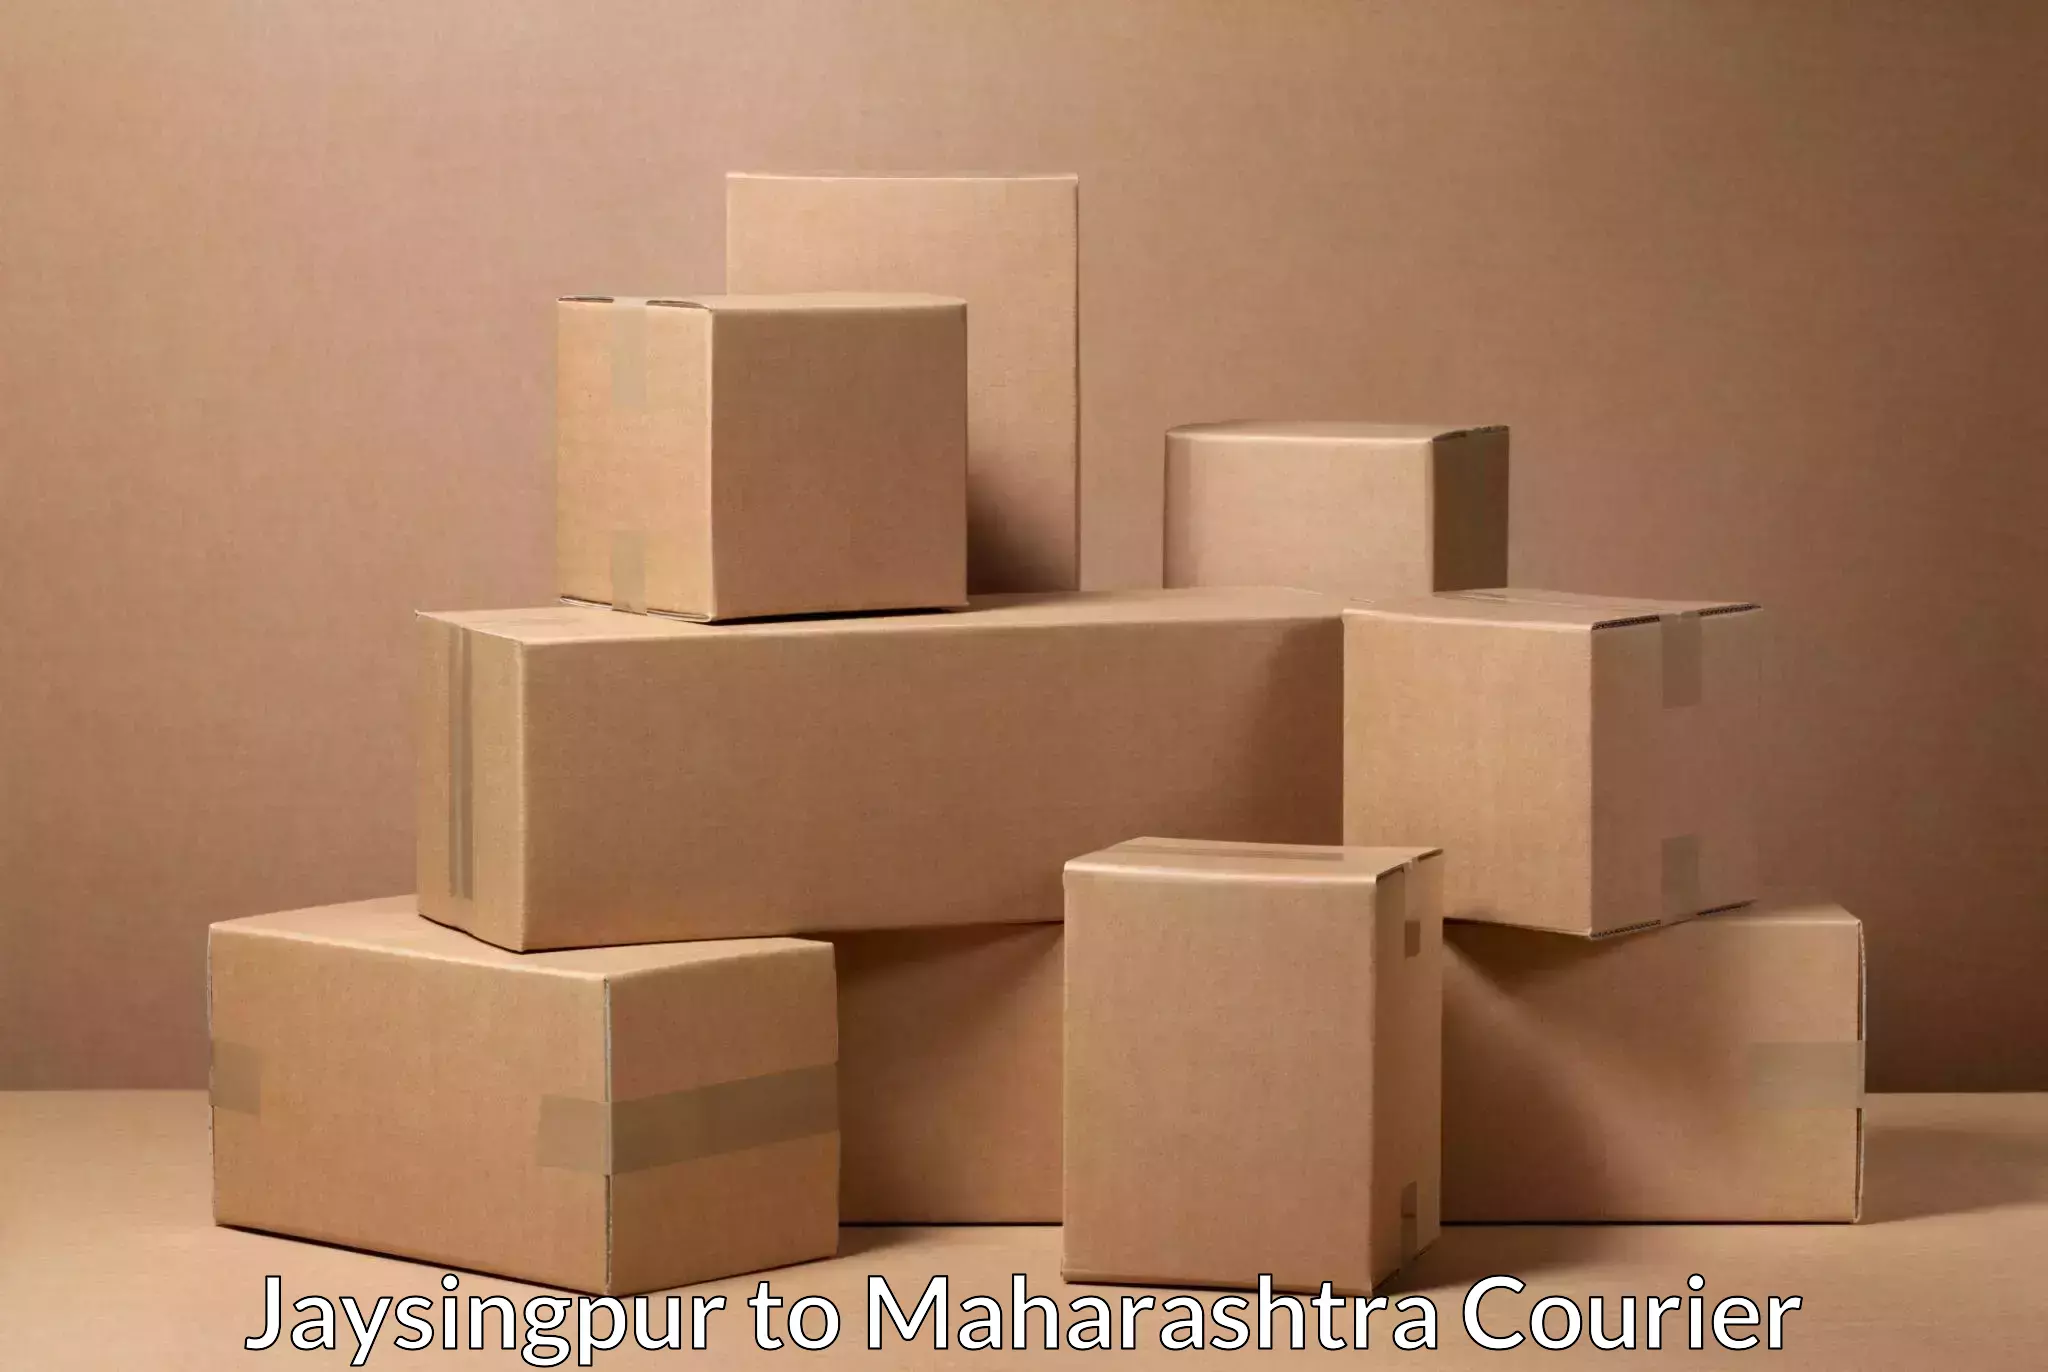 Next-generation courier services Jaysingpur to Nashik